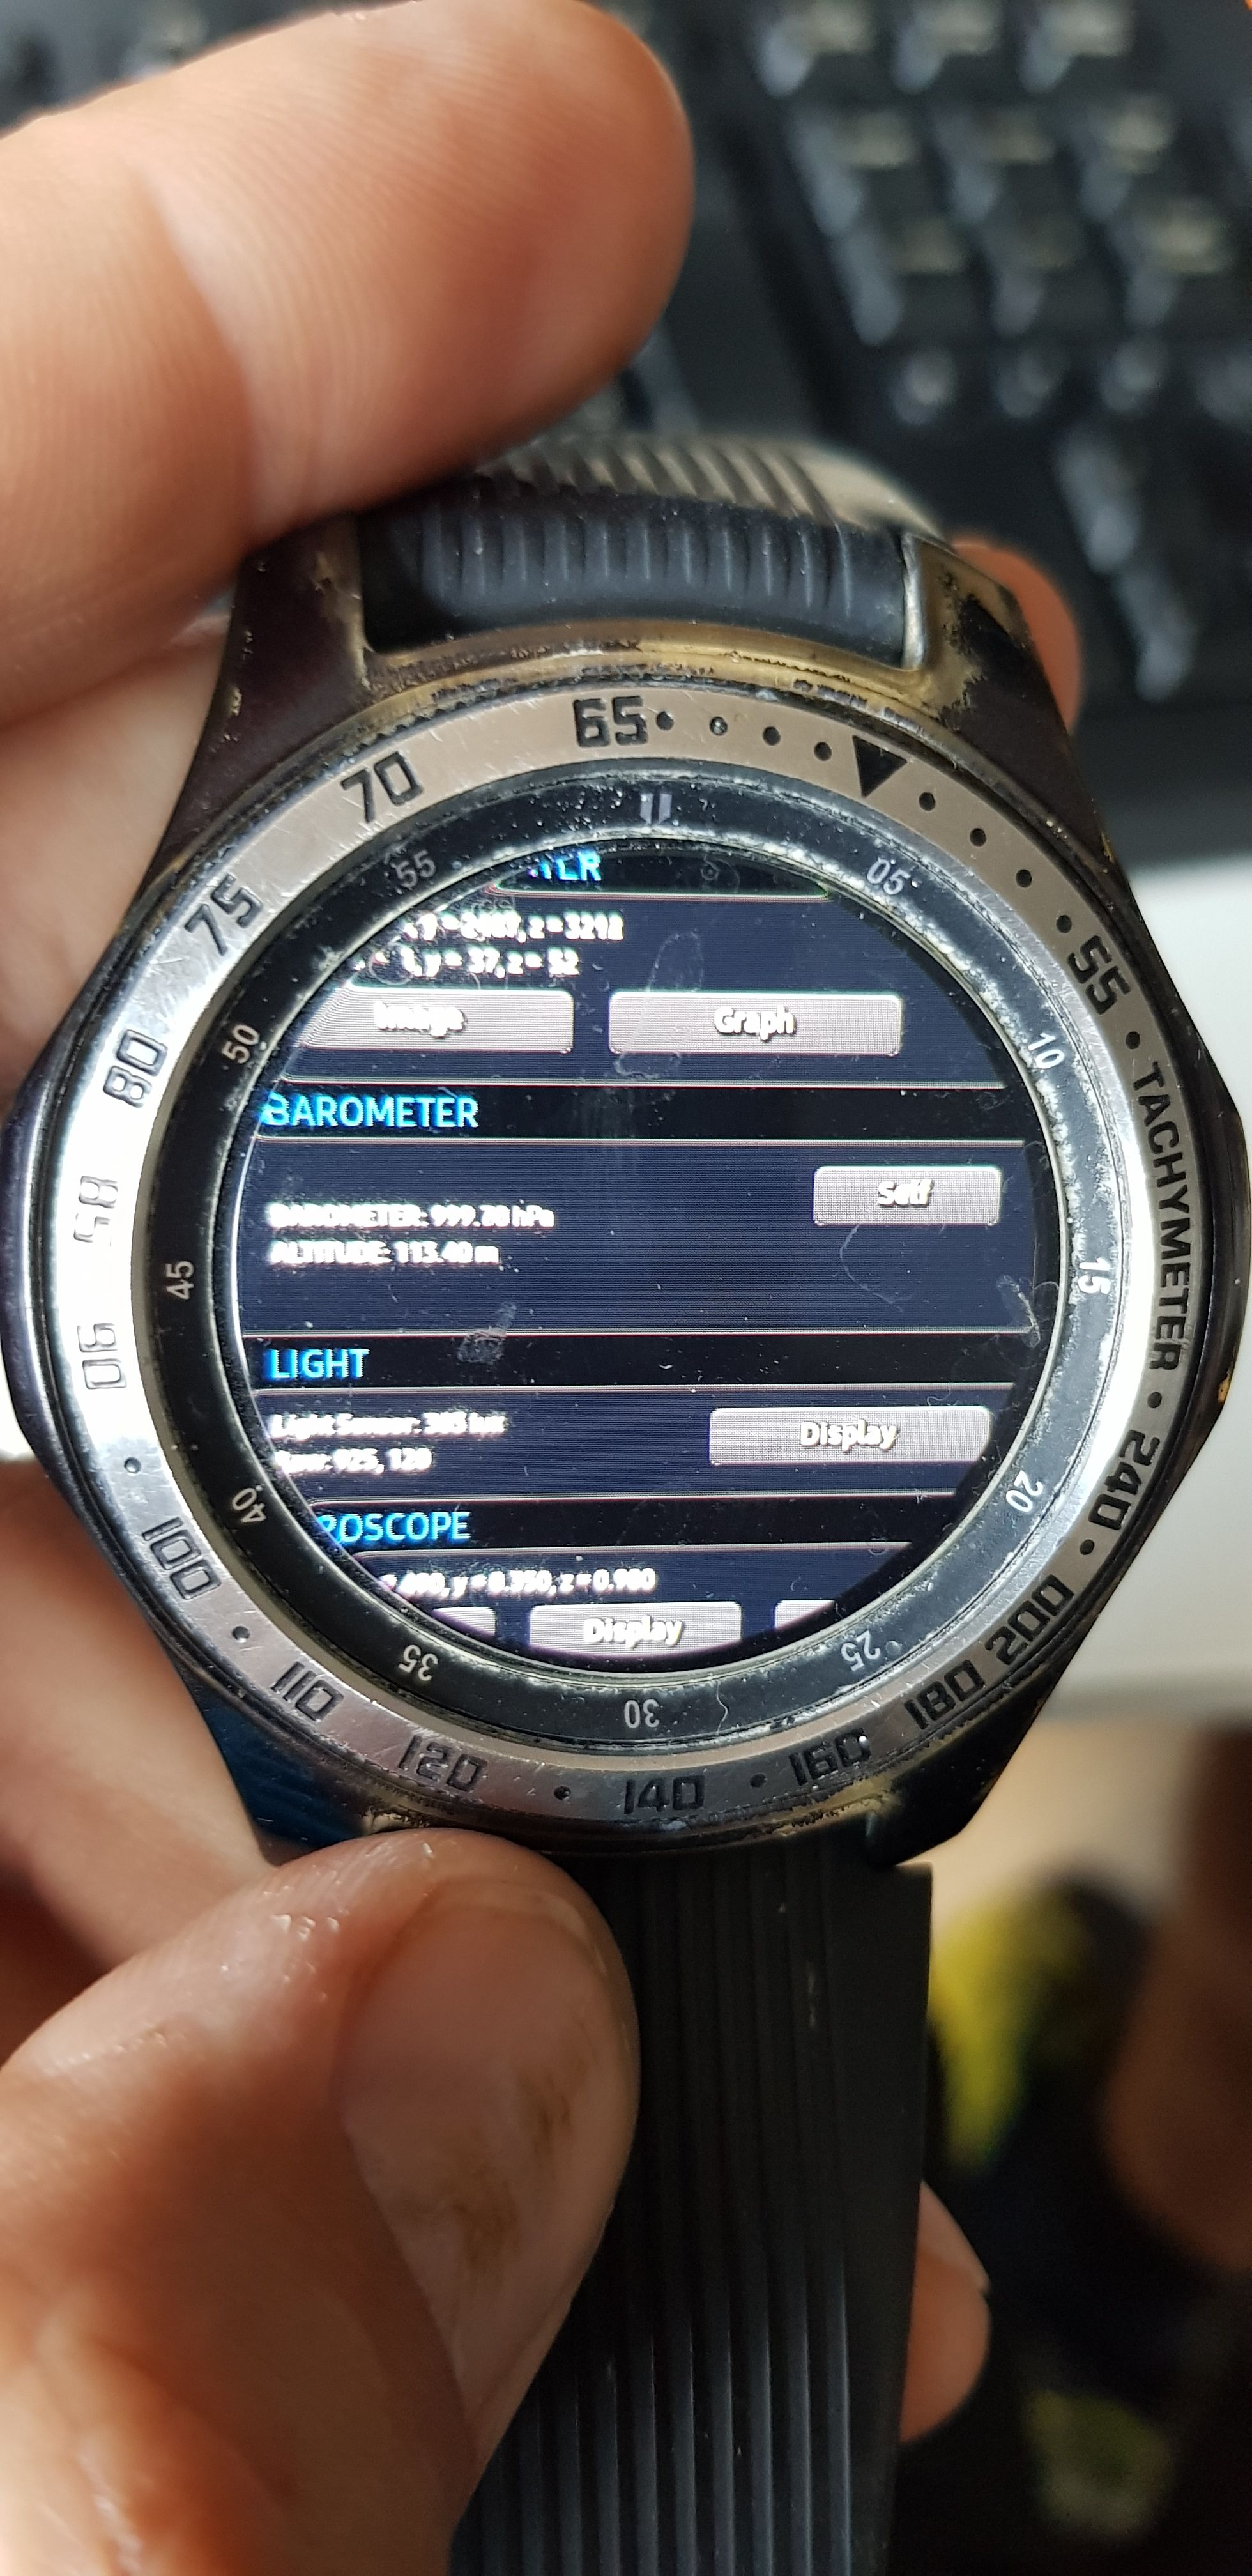 Galaxy Watch sensors stopped working - Page 2 - Samsung Community